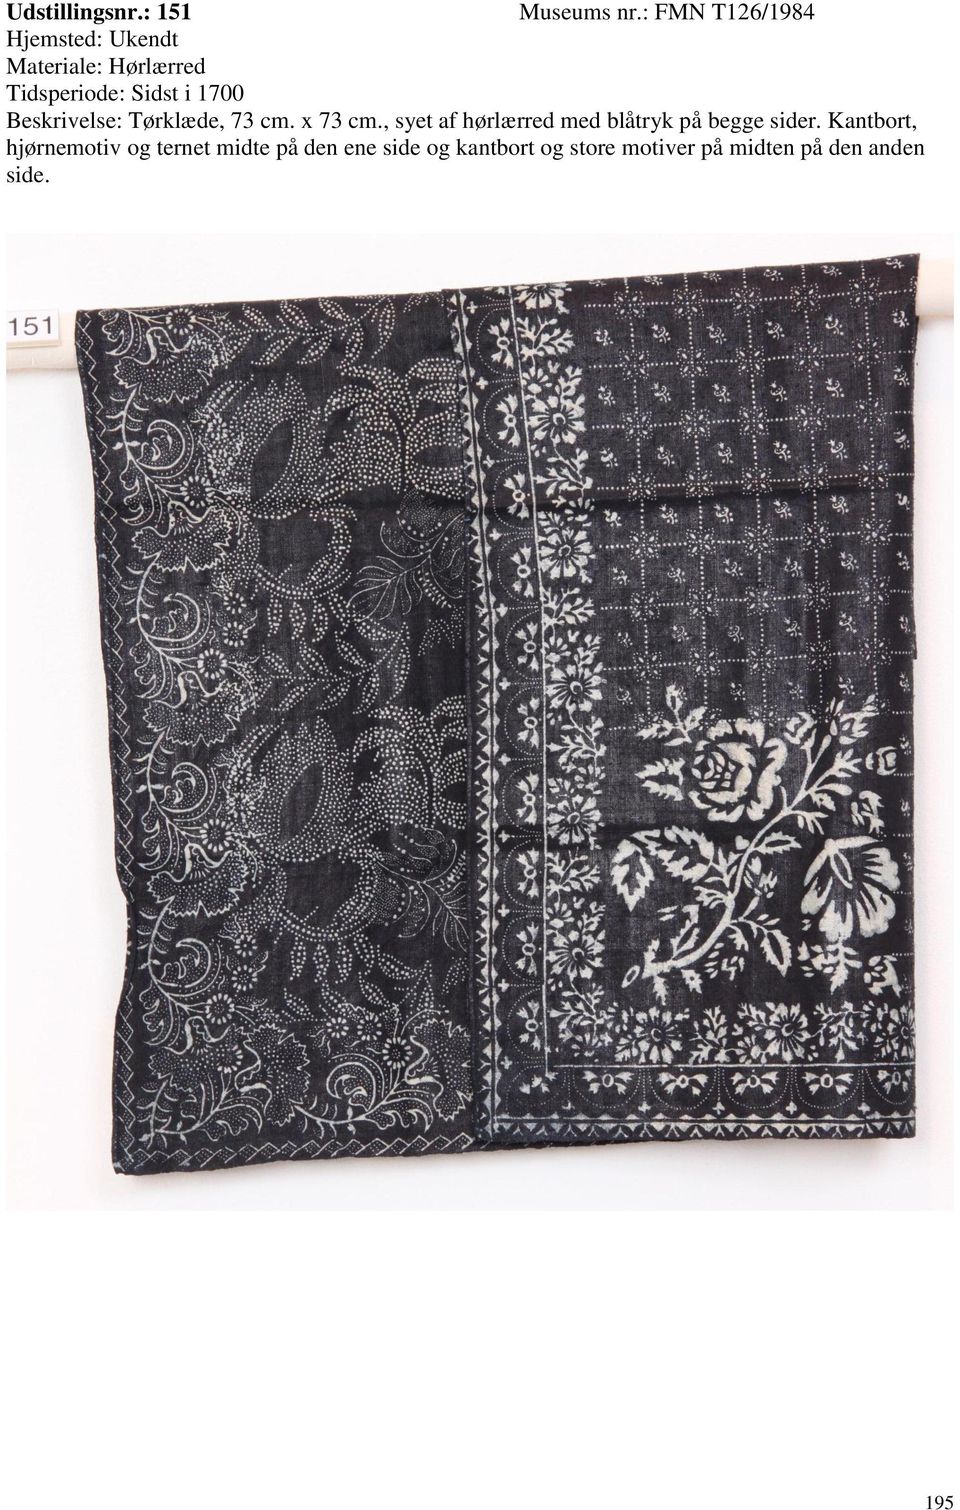 1700 Beskrivelse: Tørklæde, 73 cm. x 73 cm.